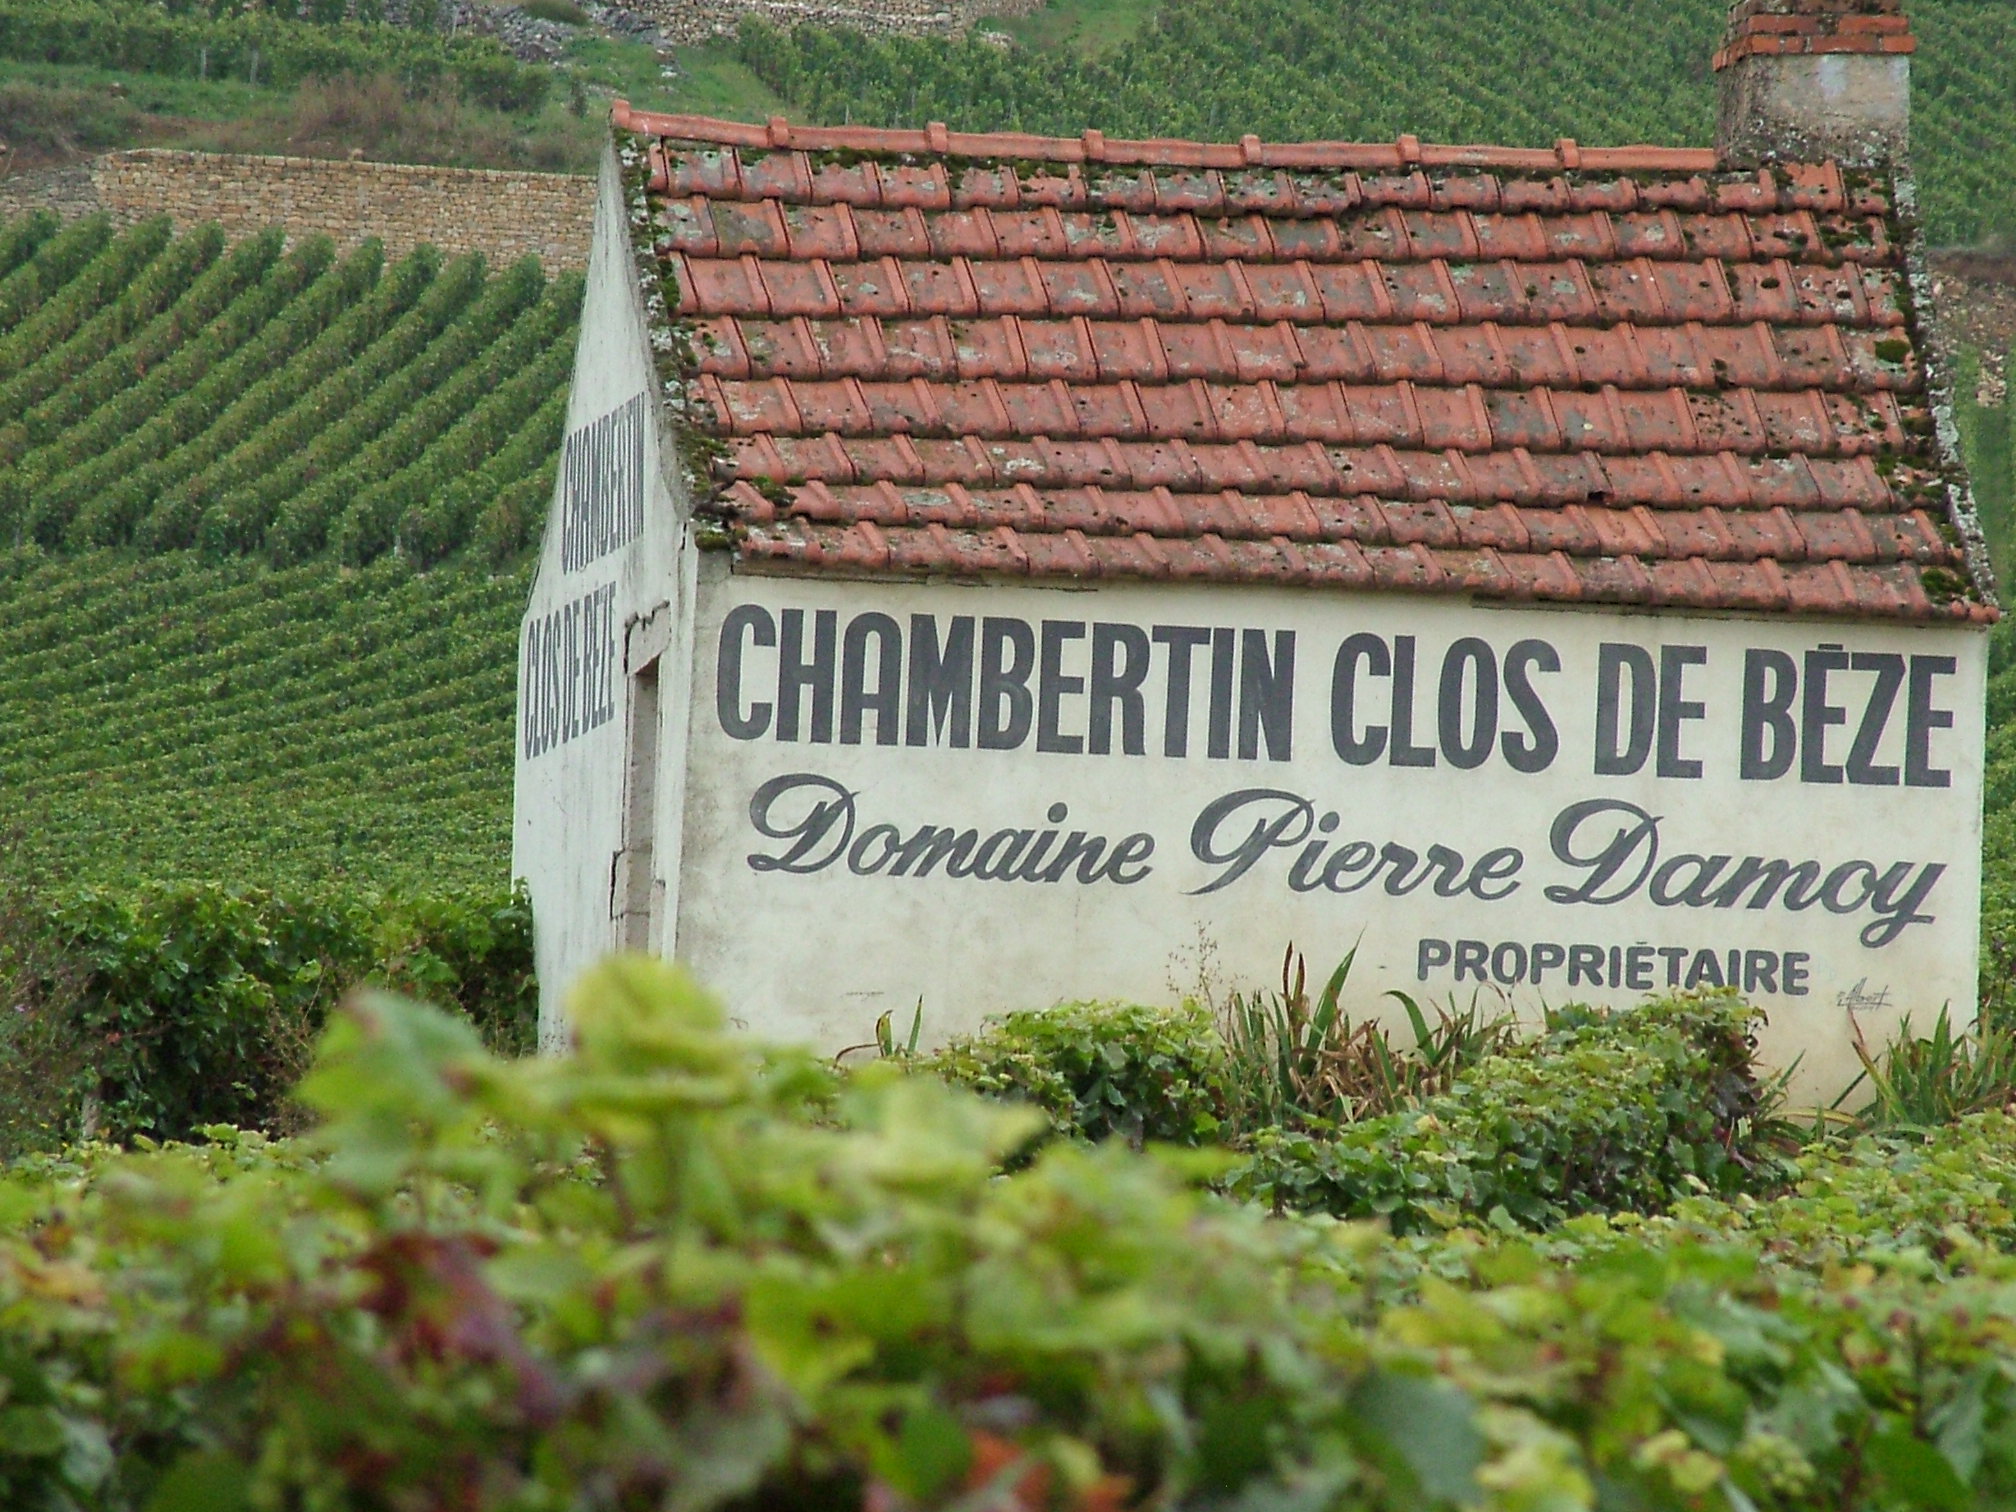 Chambertin_Clos_de_beze_Domaine_Pierre_Damoy_vineyard